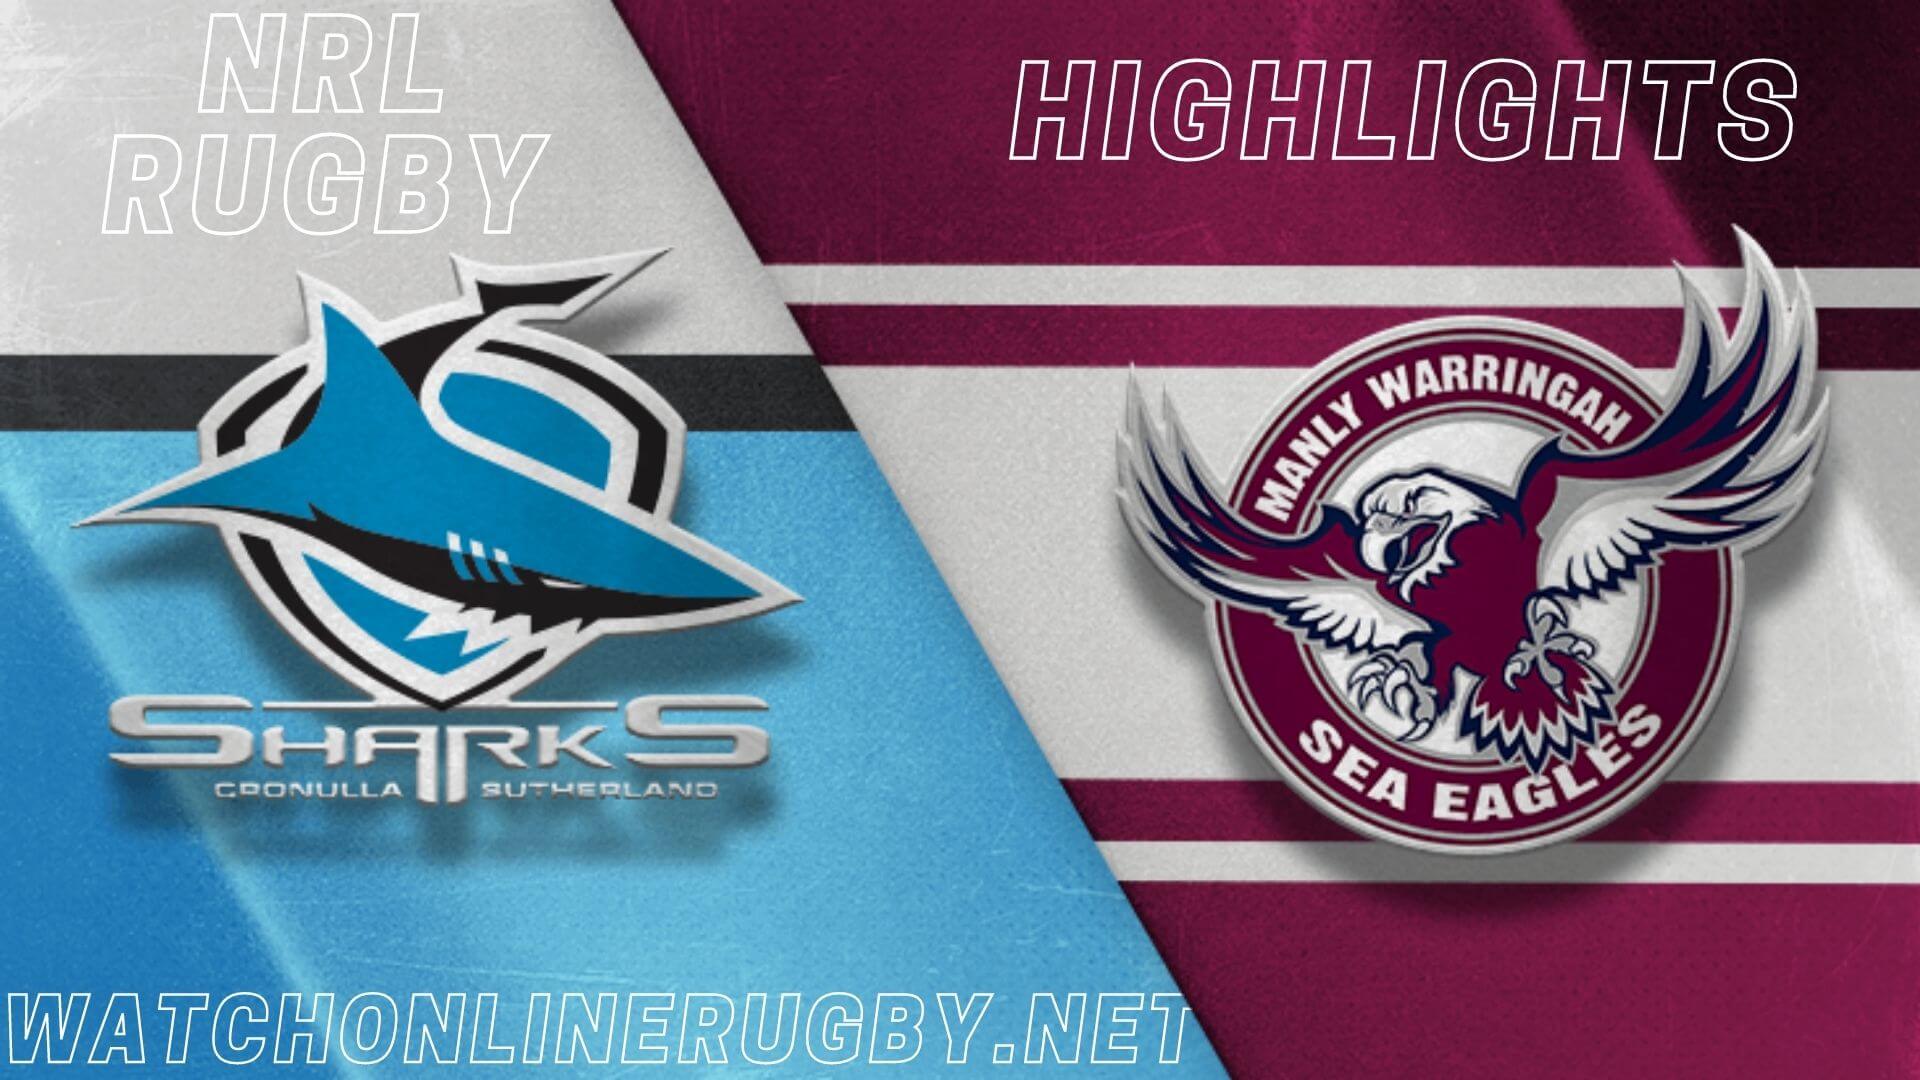 Sea Eagles Vs Sharks Highlights RD 23 NRL Rugby